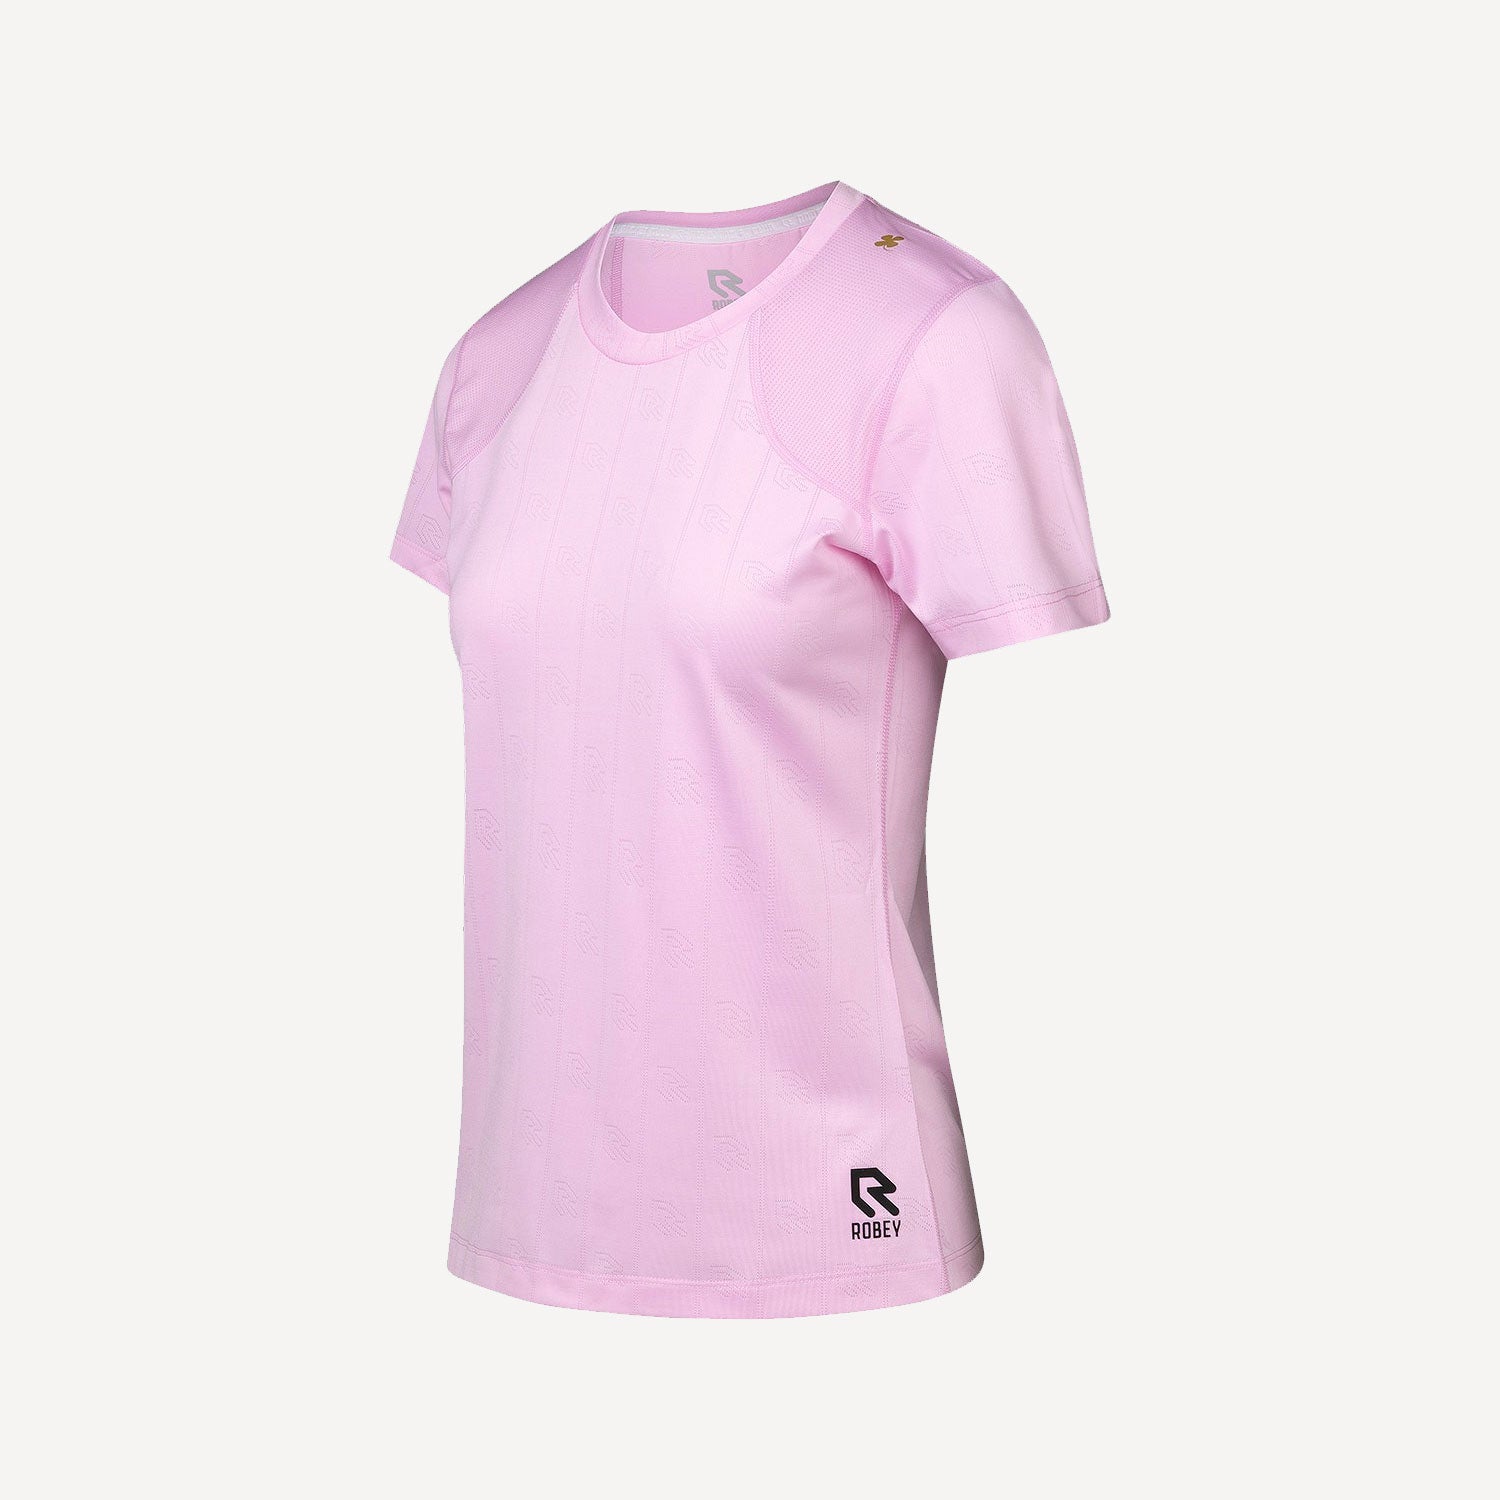 Robey Ace Women's Tennis Shirt - Pink (4)